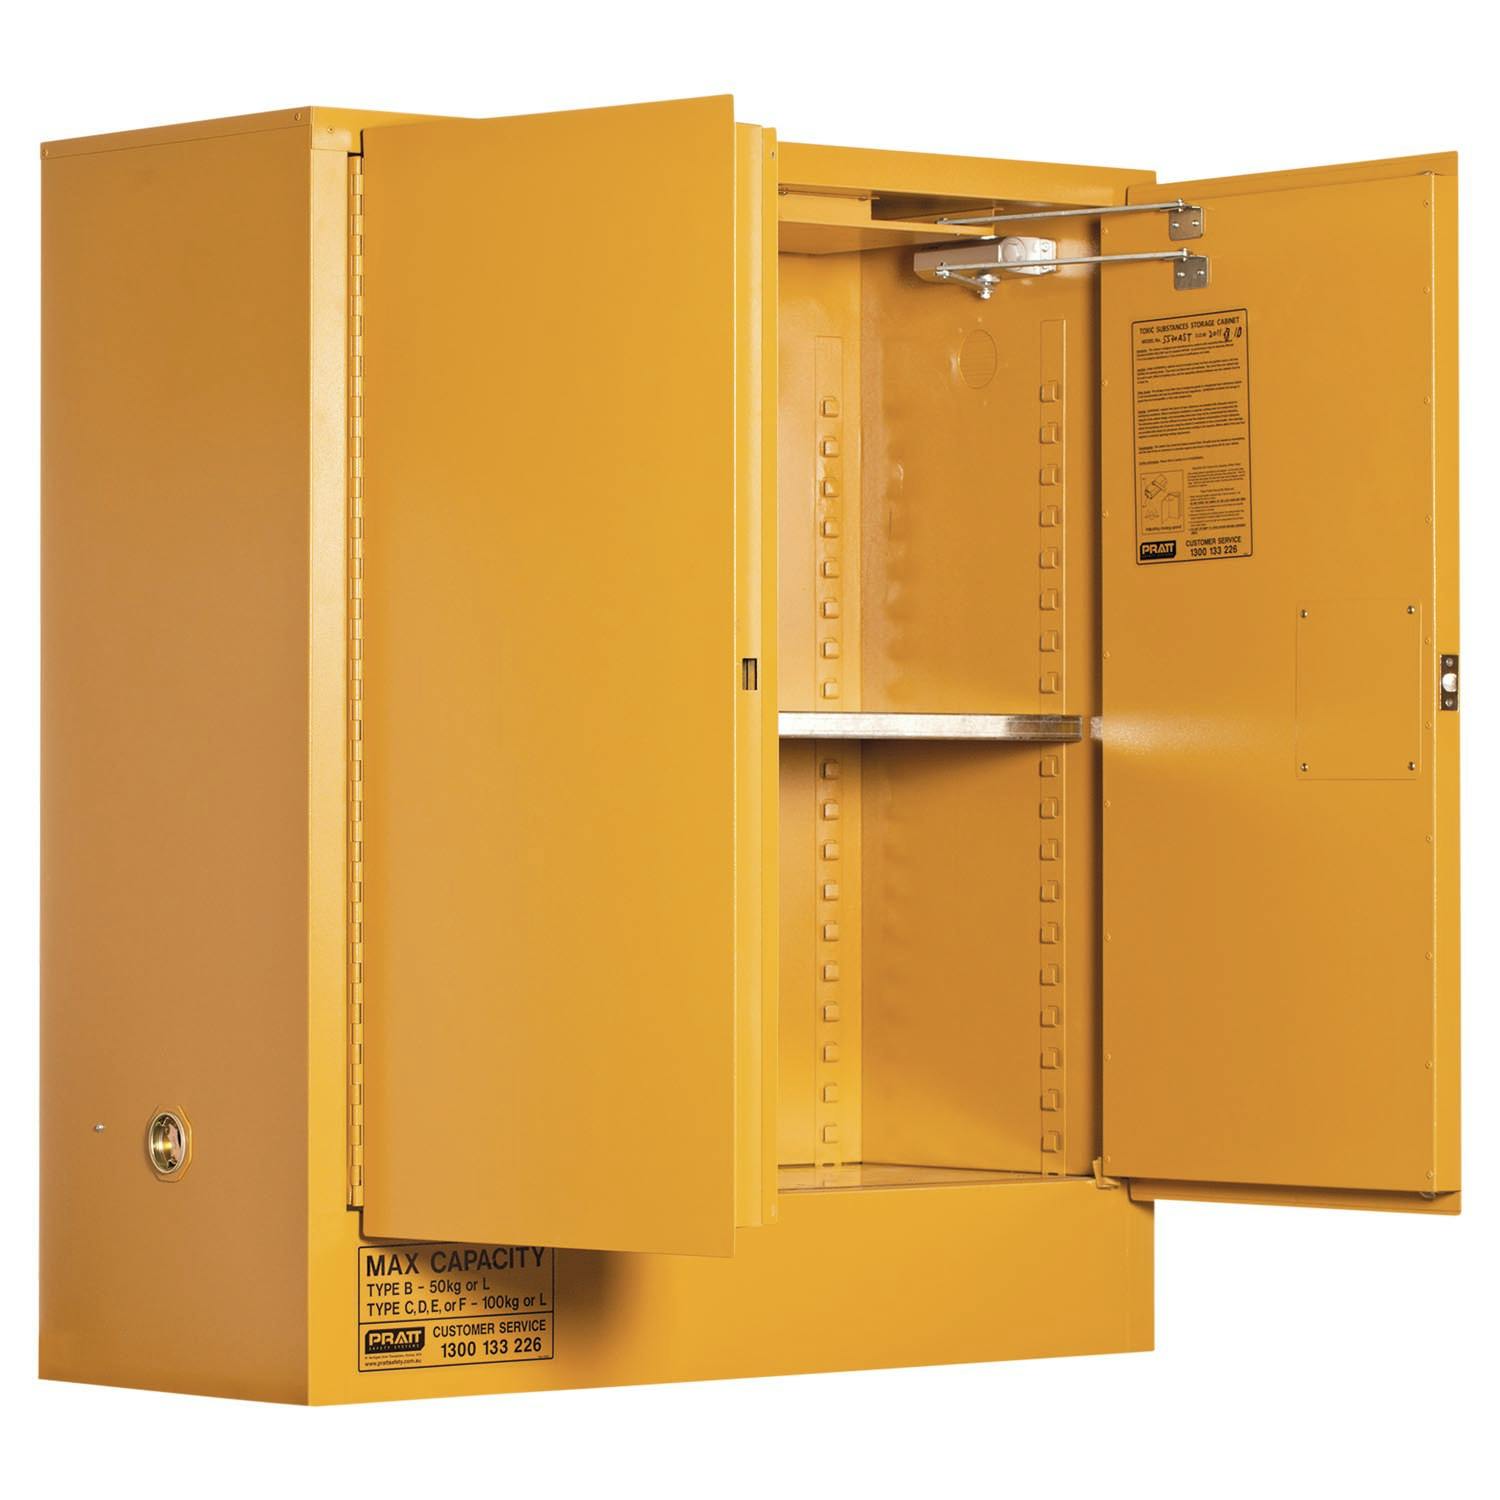 Pratt Organic Peroxide Storage Cabinet: 100L - 2 Doors - 2 Shelves